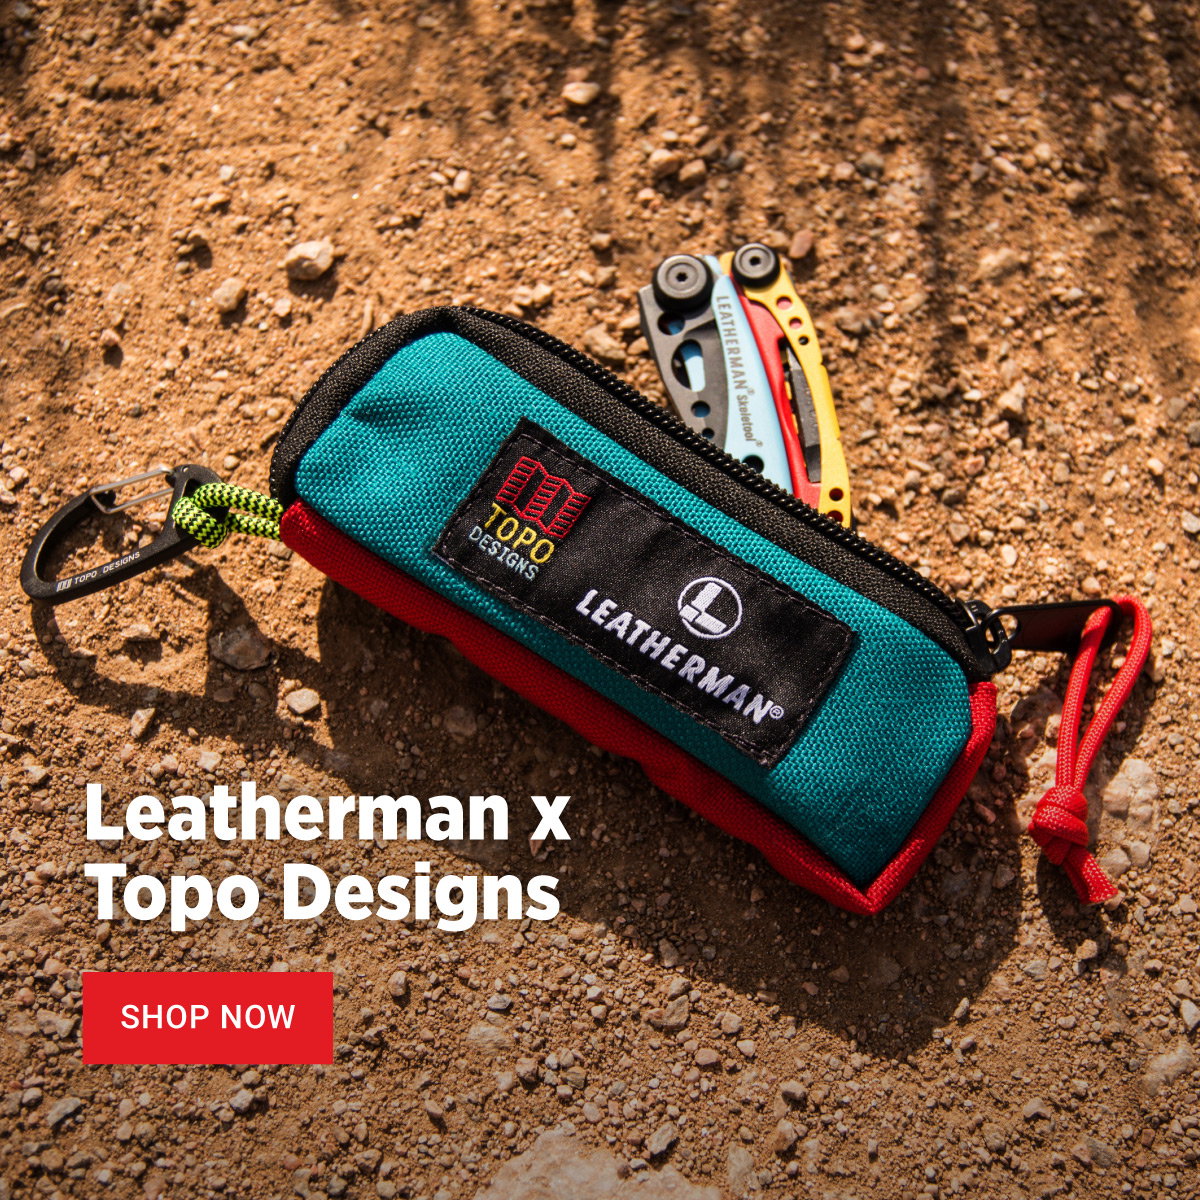 Topo Designs x Leatherman Skeletool Set